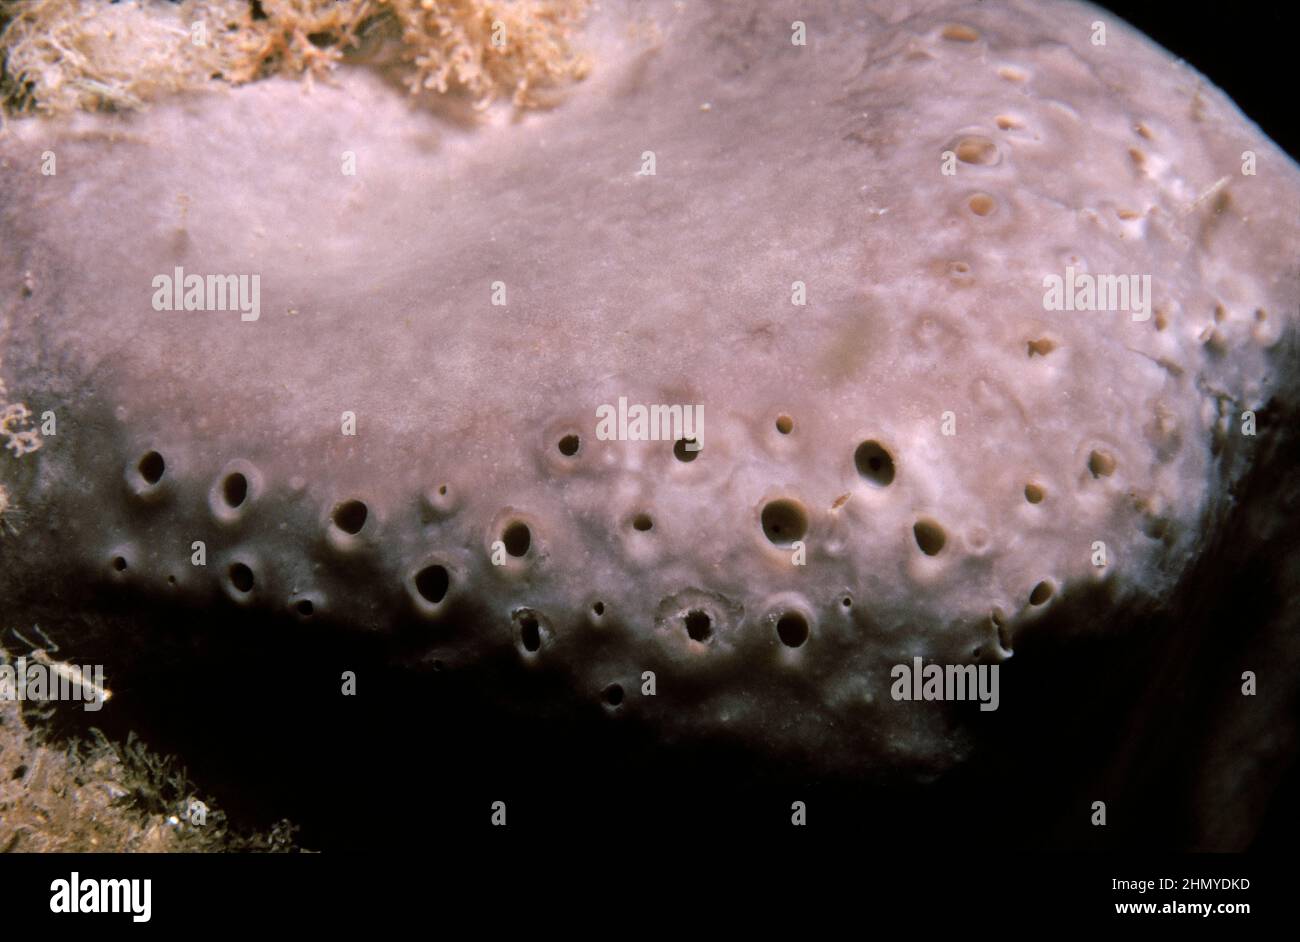 Elephant hide sponge (Pachymatisma johnstonia) on a rock substrate, British Isles. Stock Photo